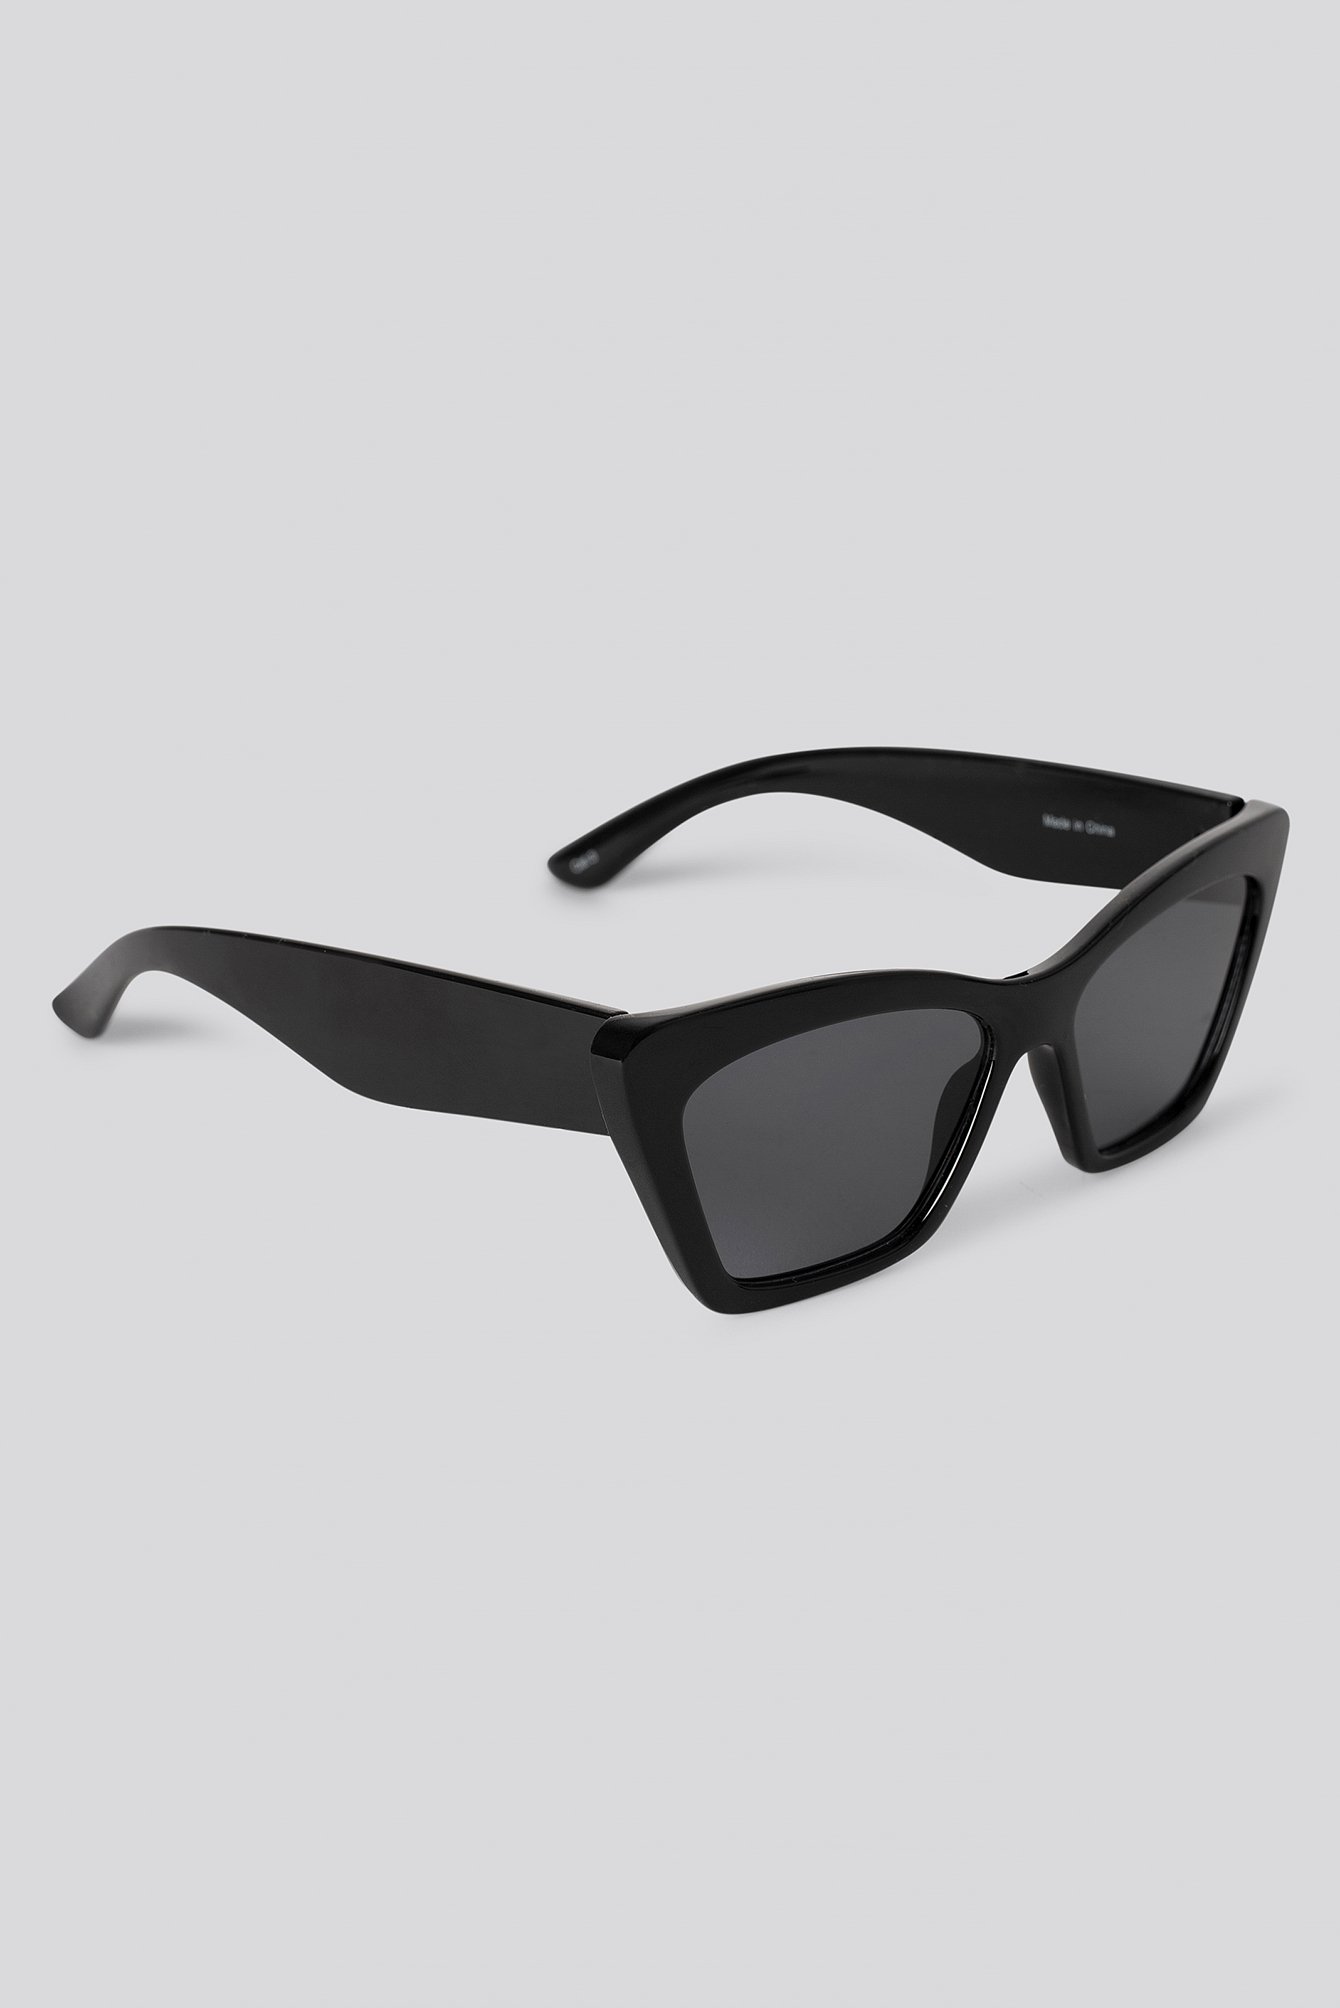 versace black cateye sunglasses